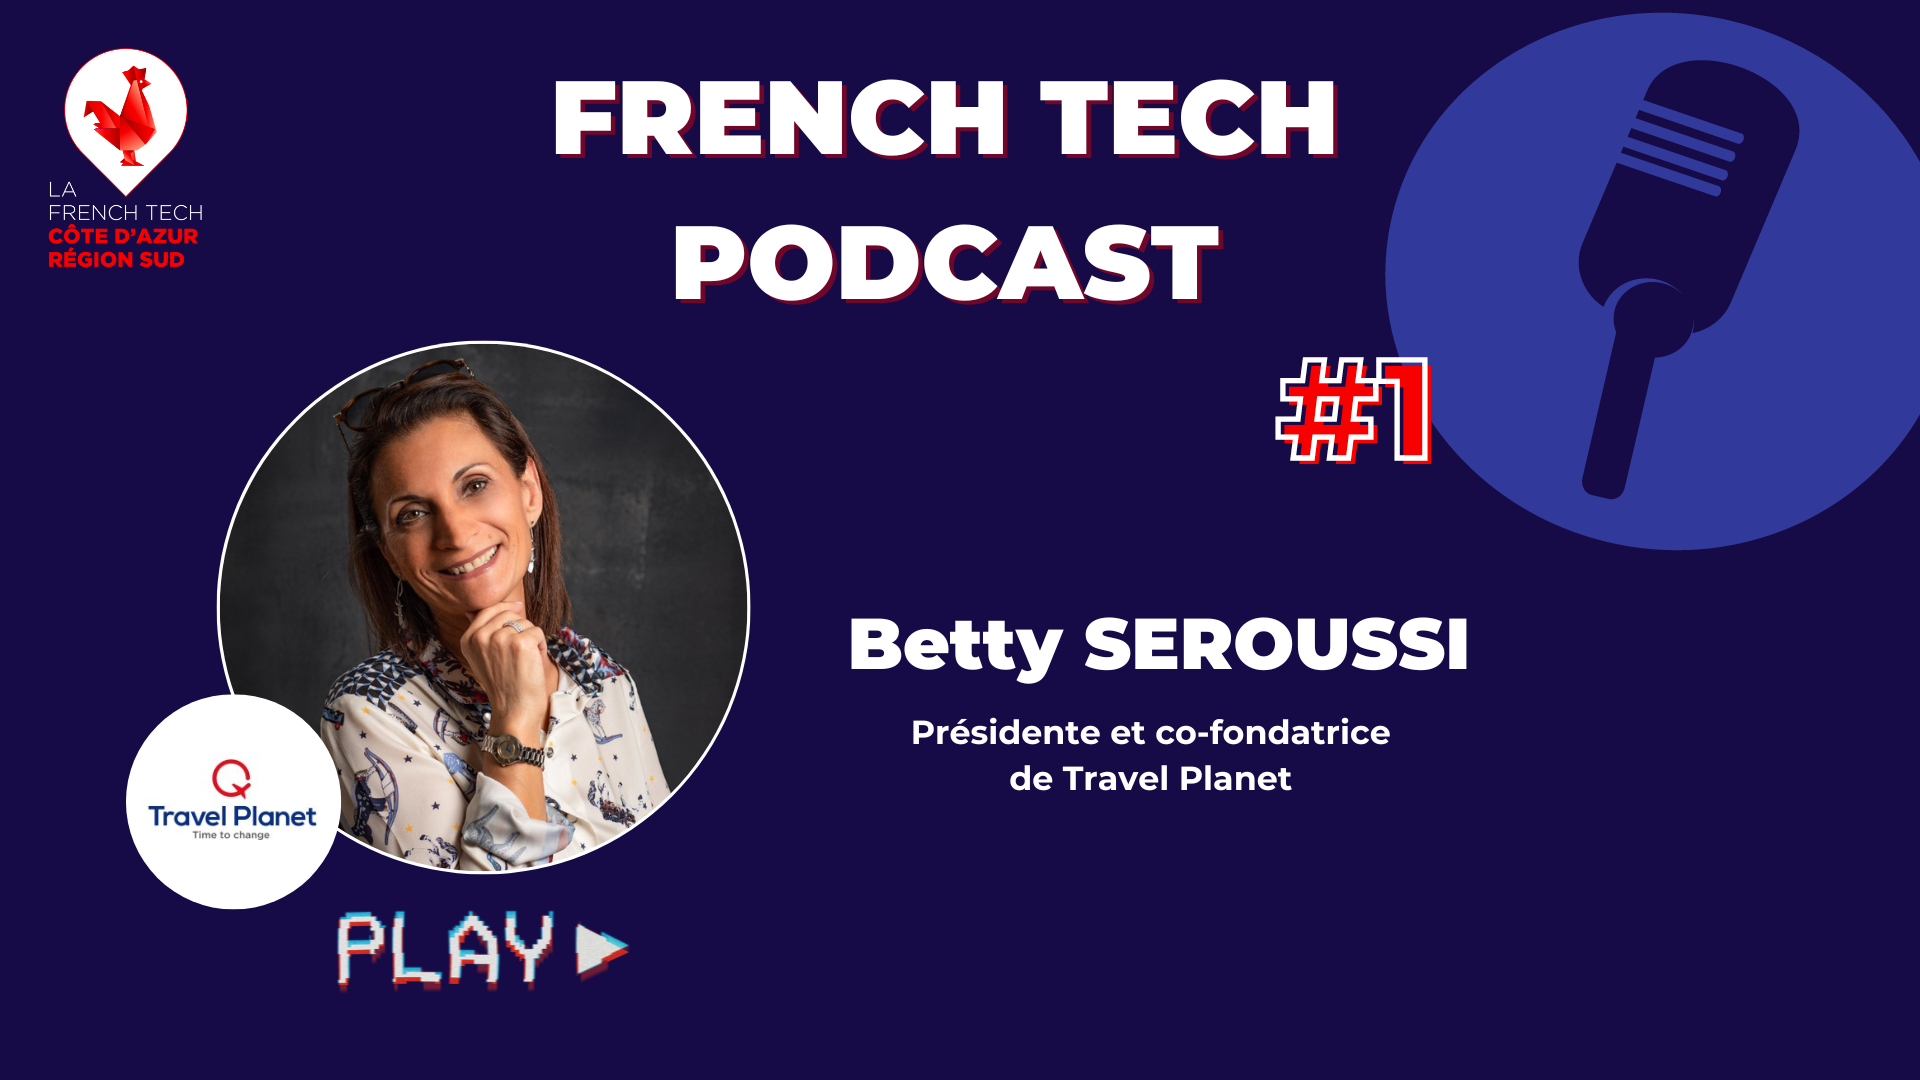 French Tech Podcast #1 Betty Seroussi de Travel Planet